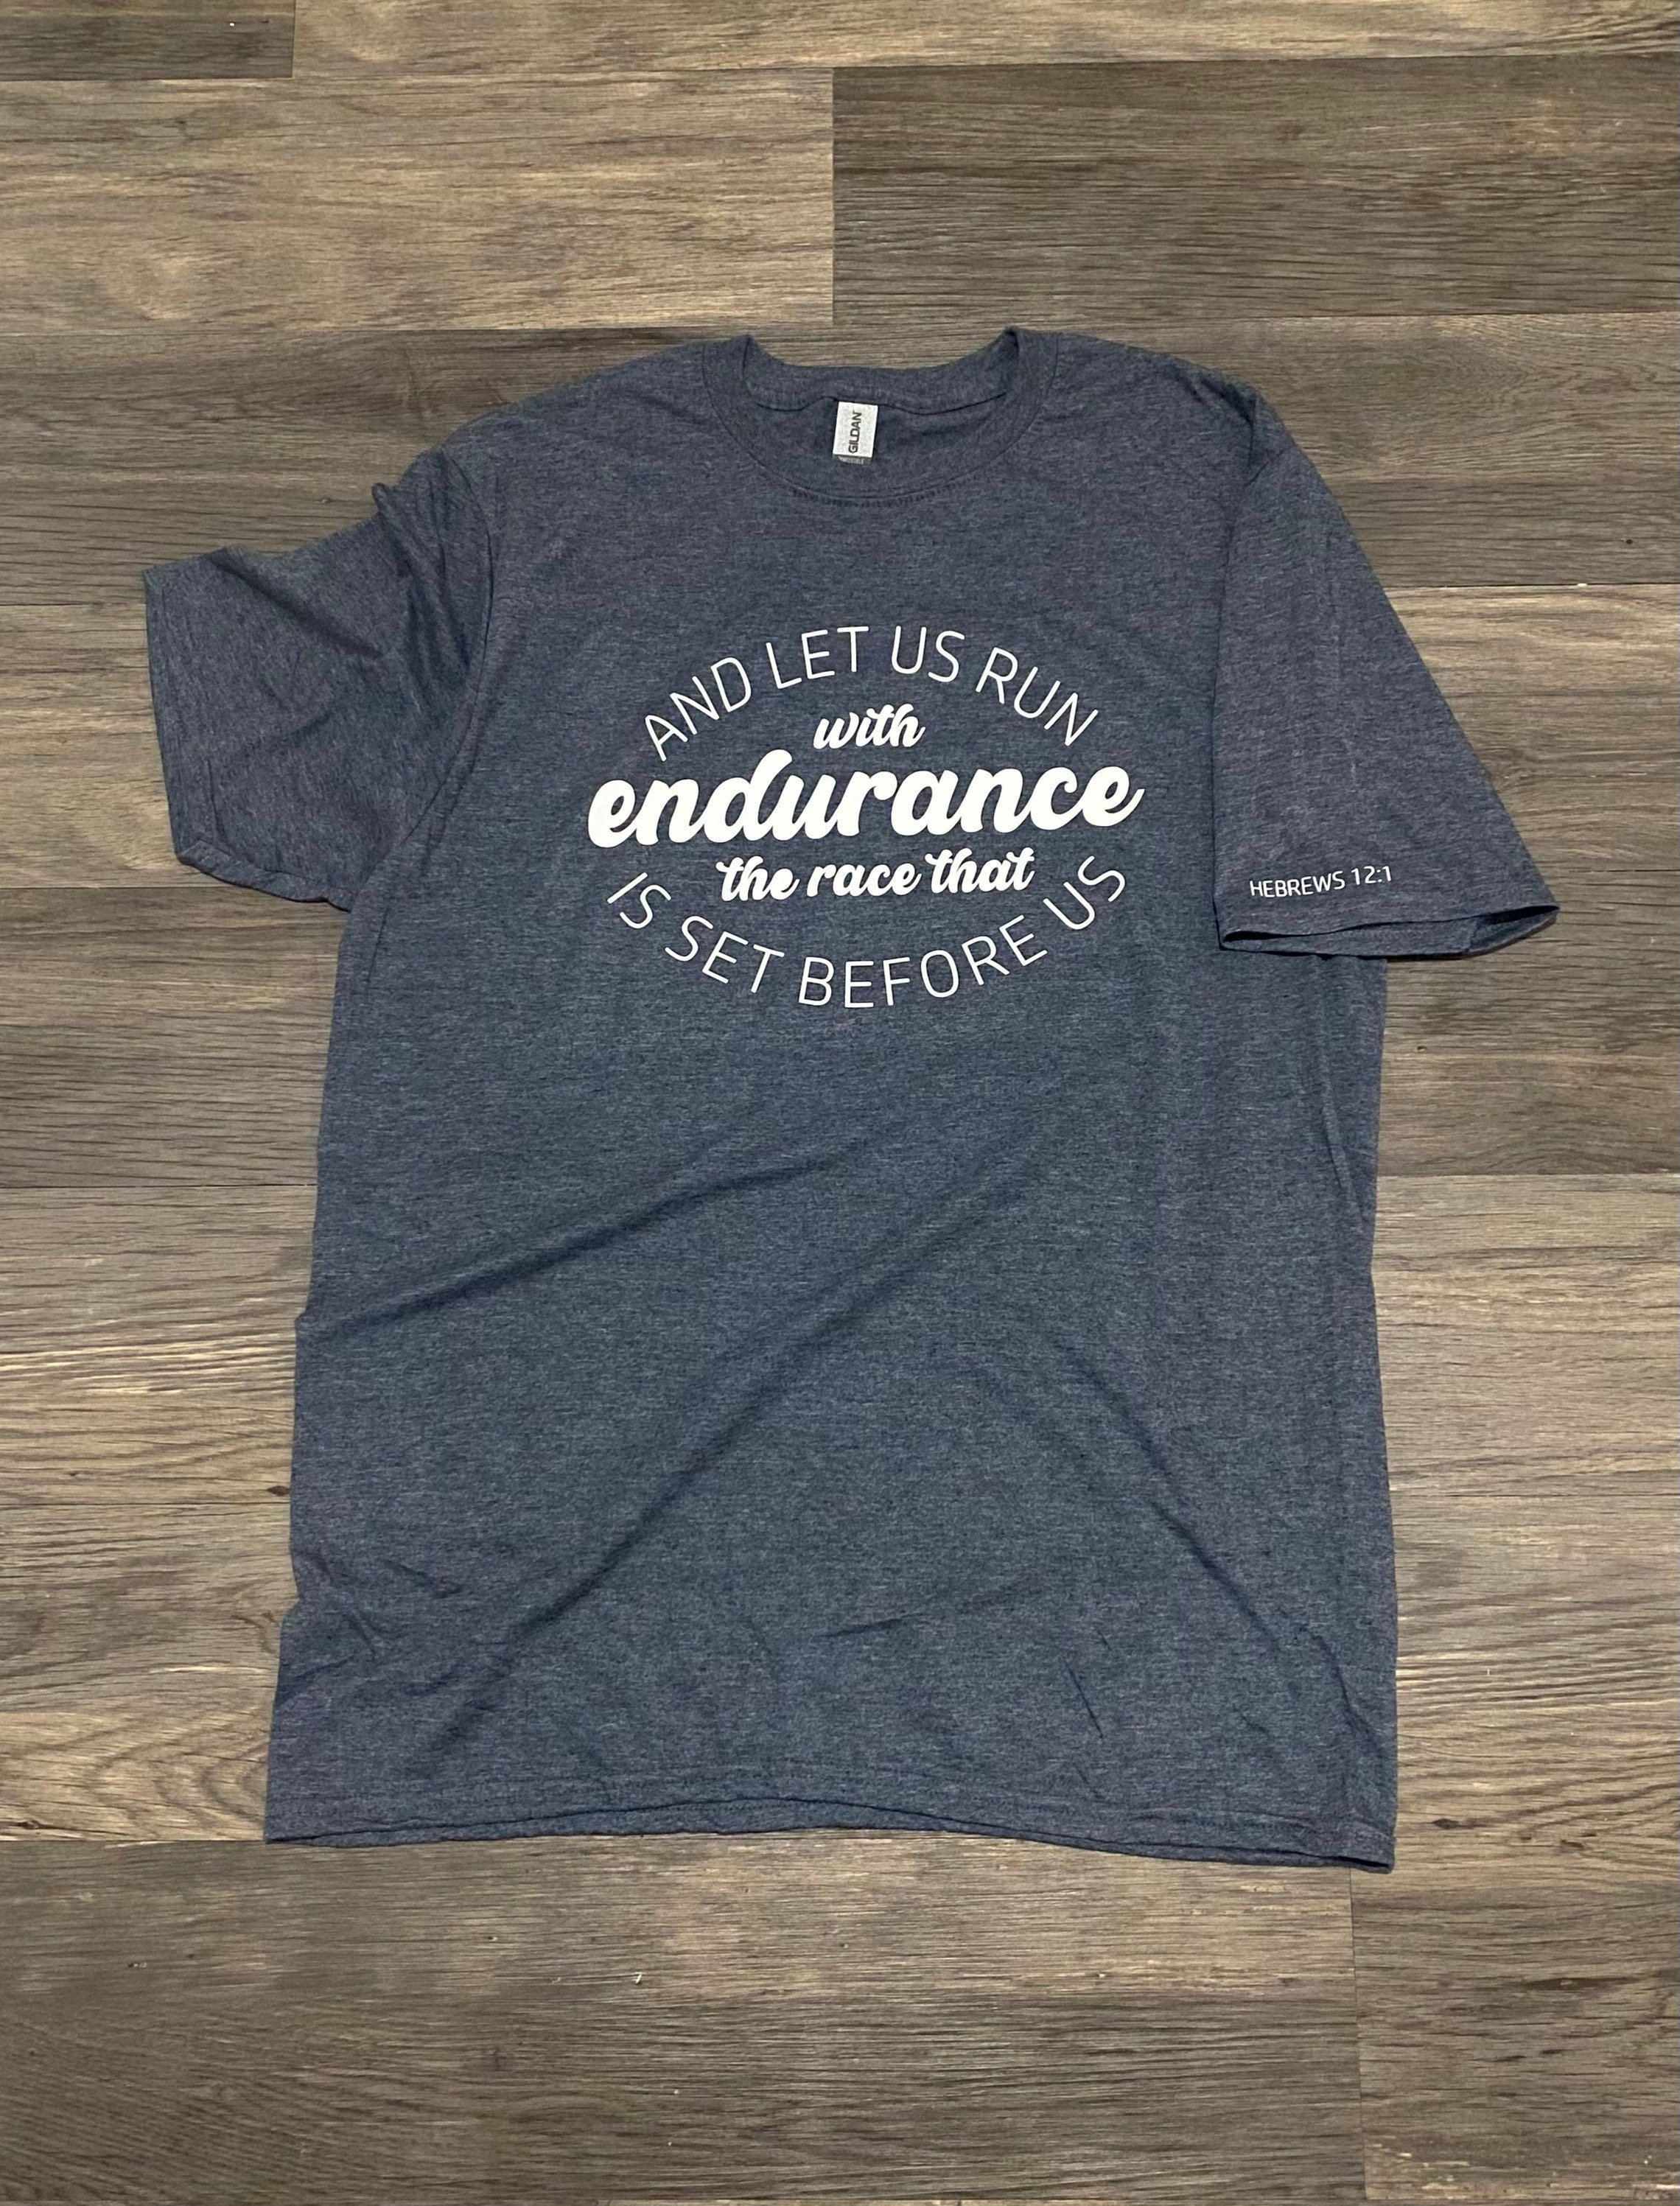 Hebrews 12:1 Endurance T-shirt Item Handmade Order. Etsy